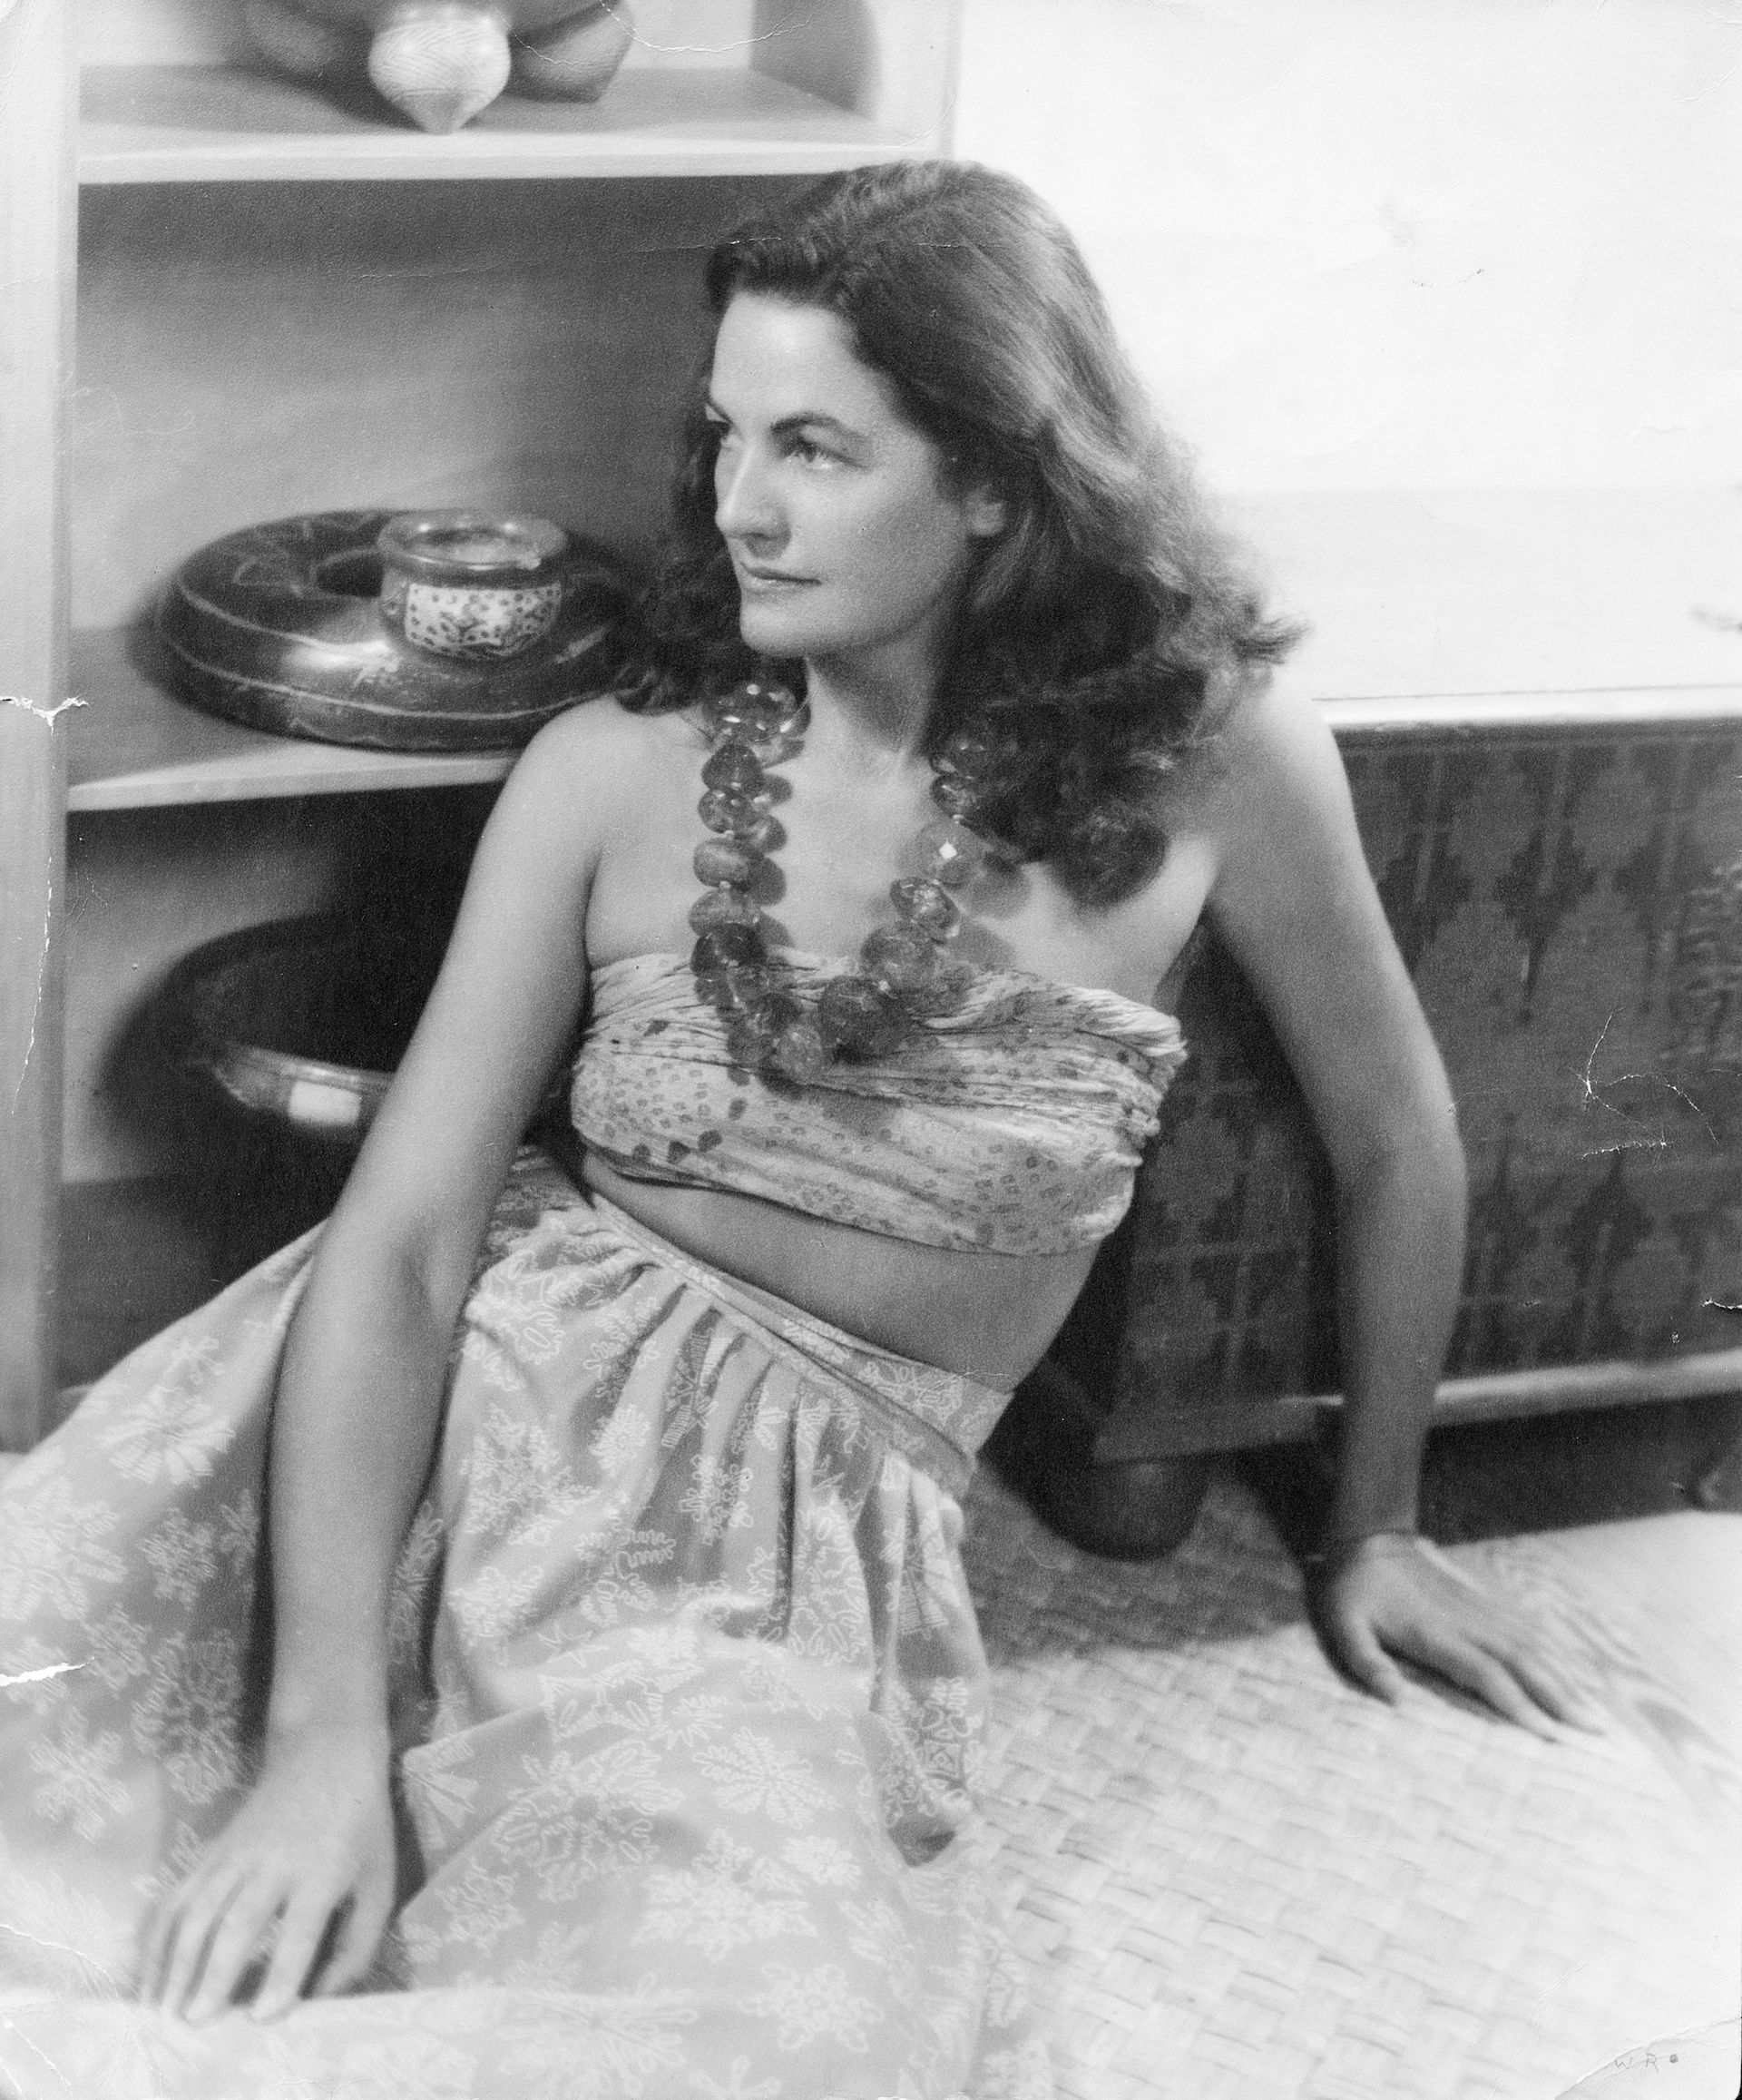 Alice Rahon in Mexico, around 1940-41 Photo: Walter Reuter. Courtesy Gallery Wendi Norris

